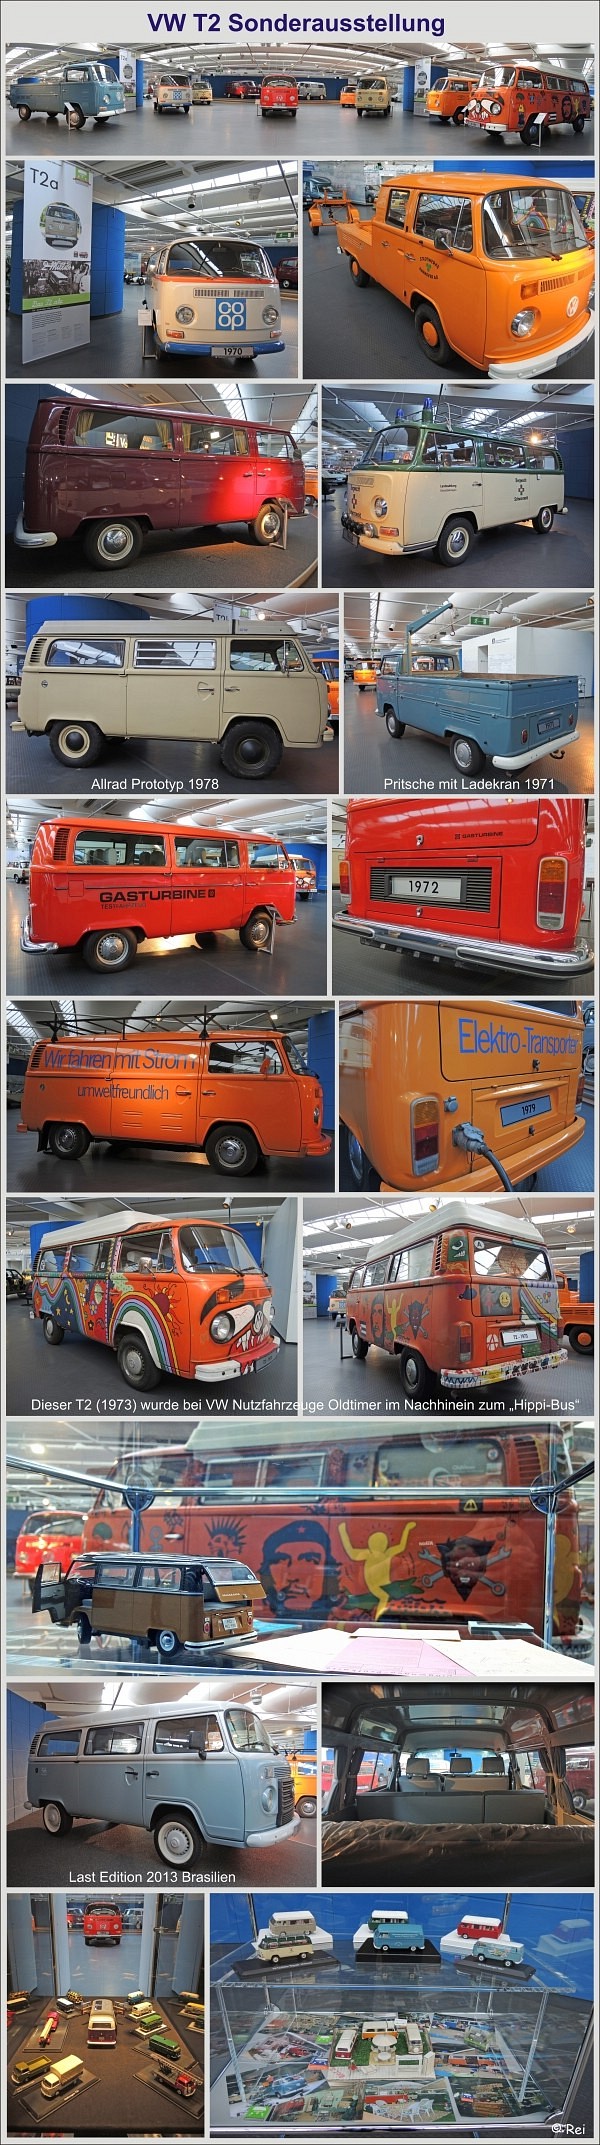 VW Automuseum T2 Sonderausstellung